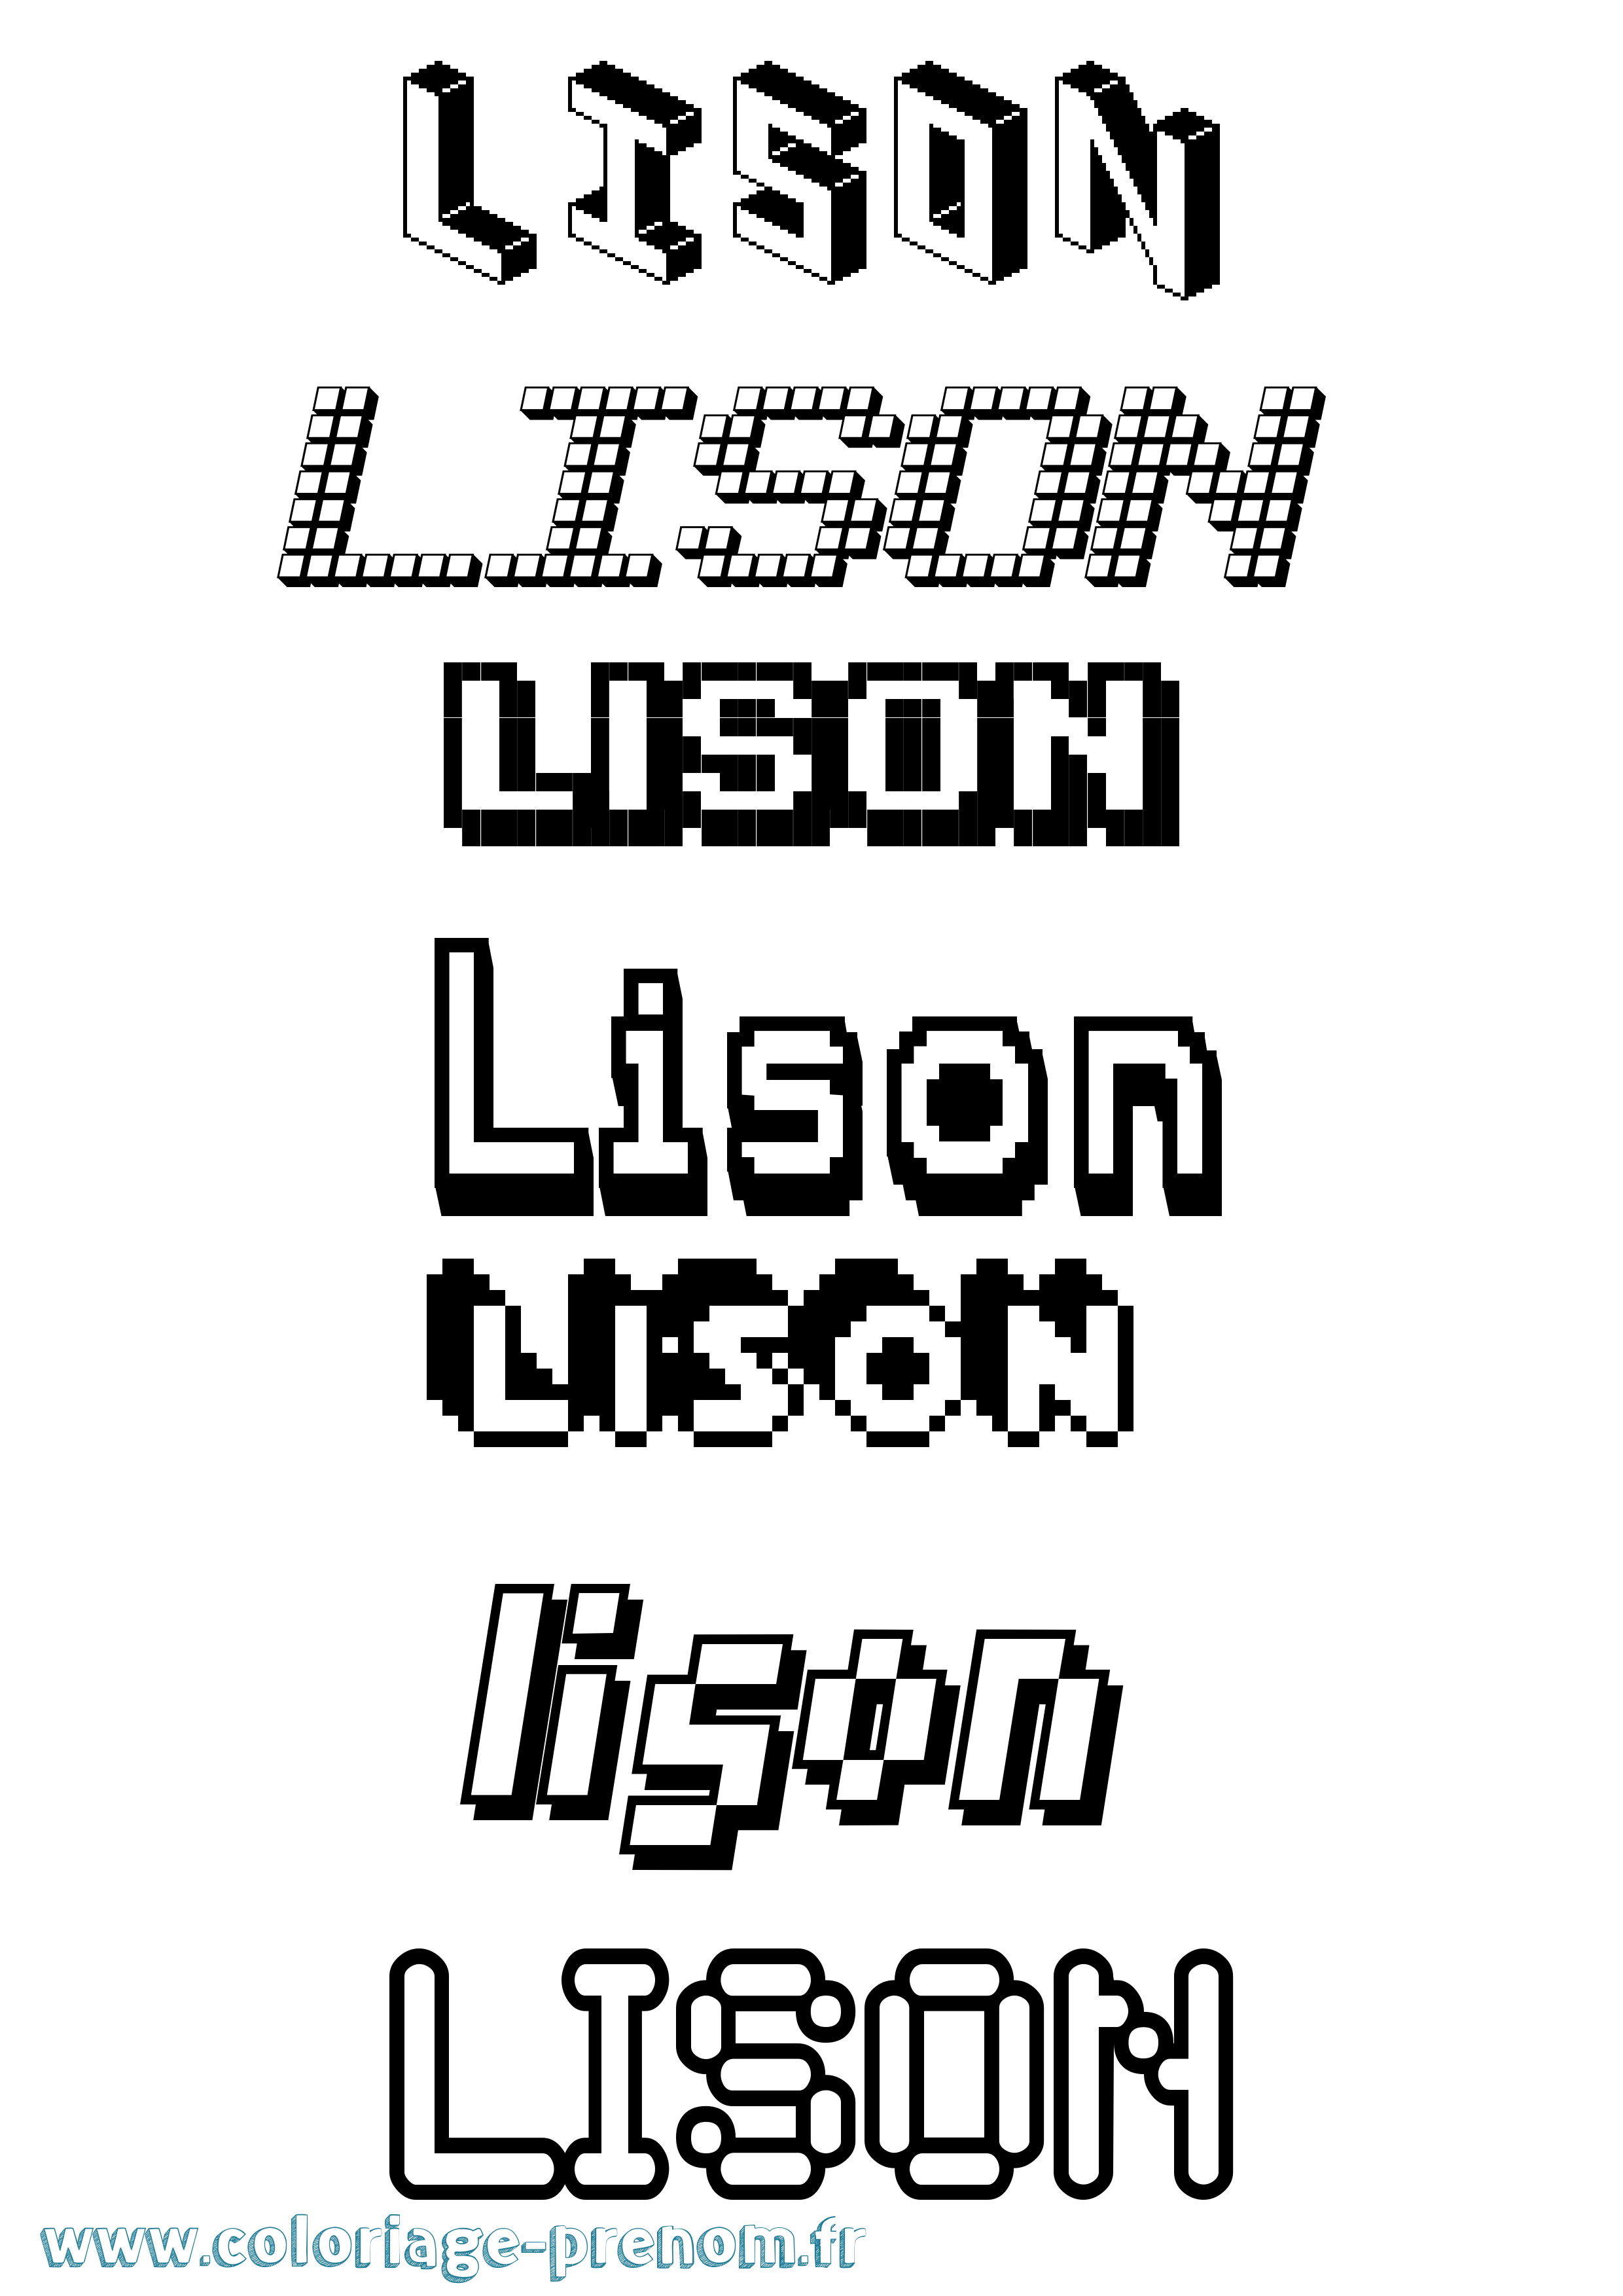 Coloriage prénom Lison